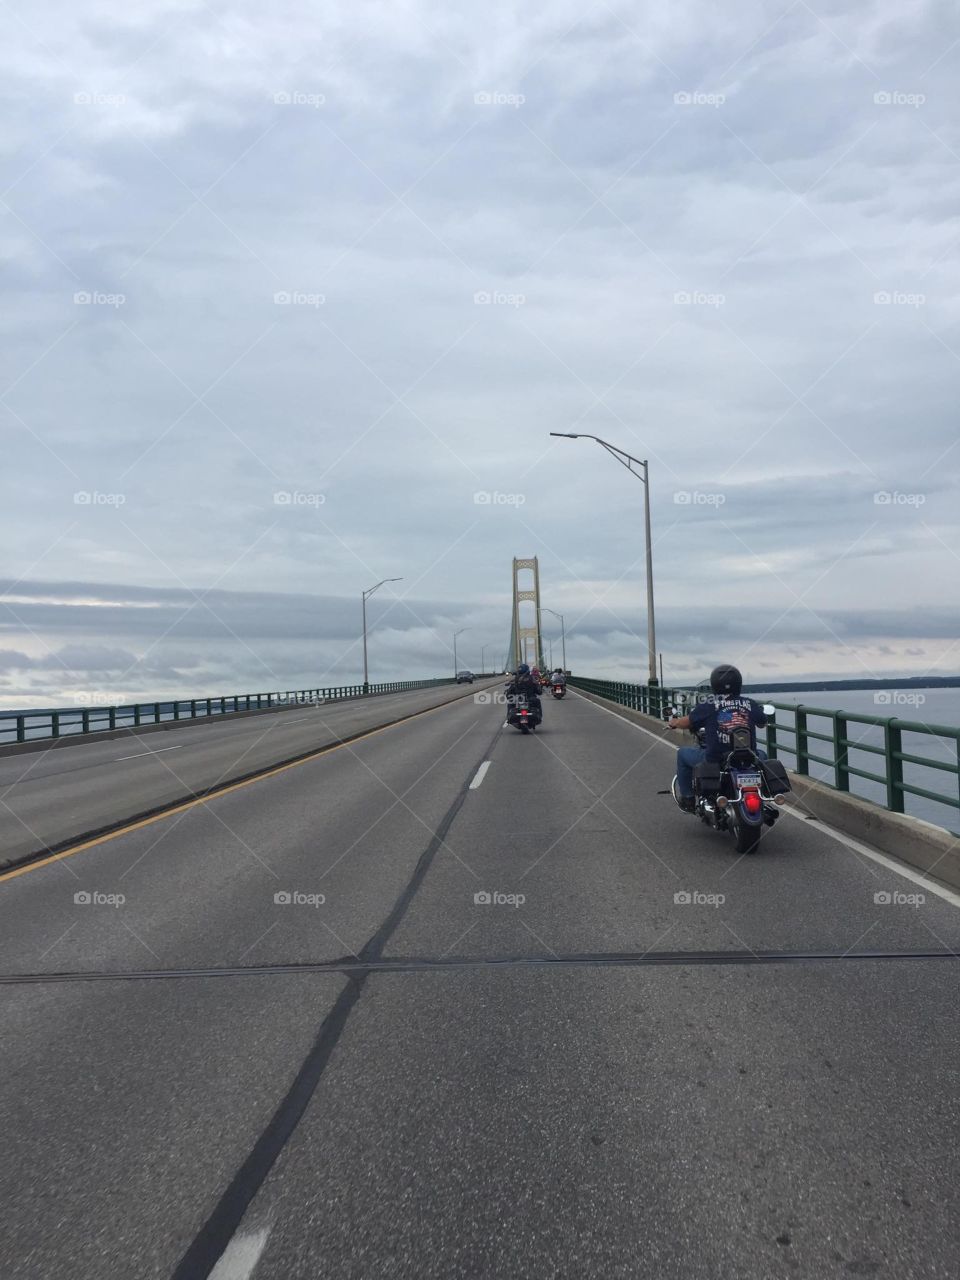 Riding the bridge